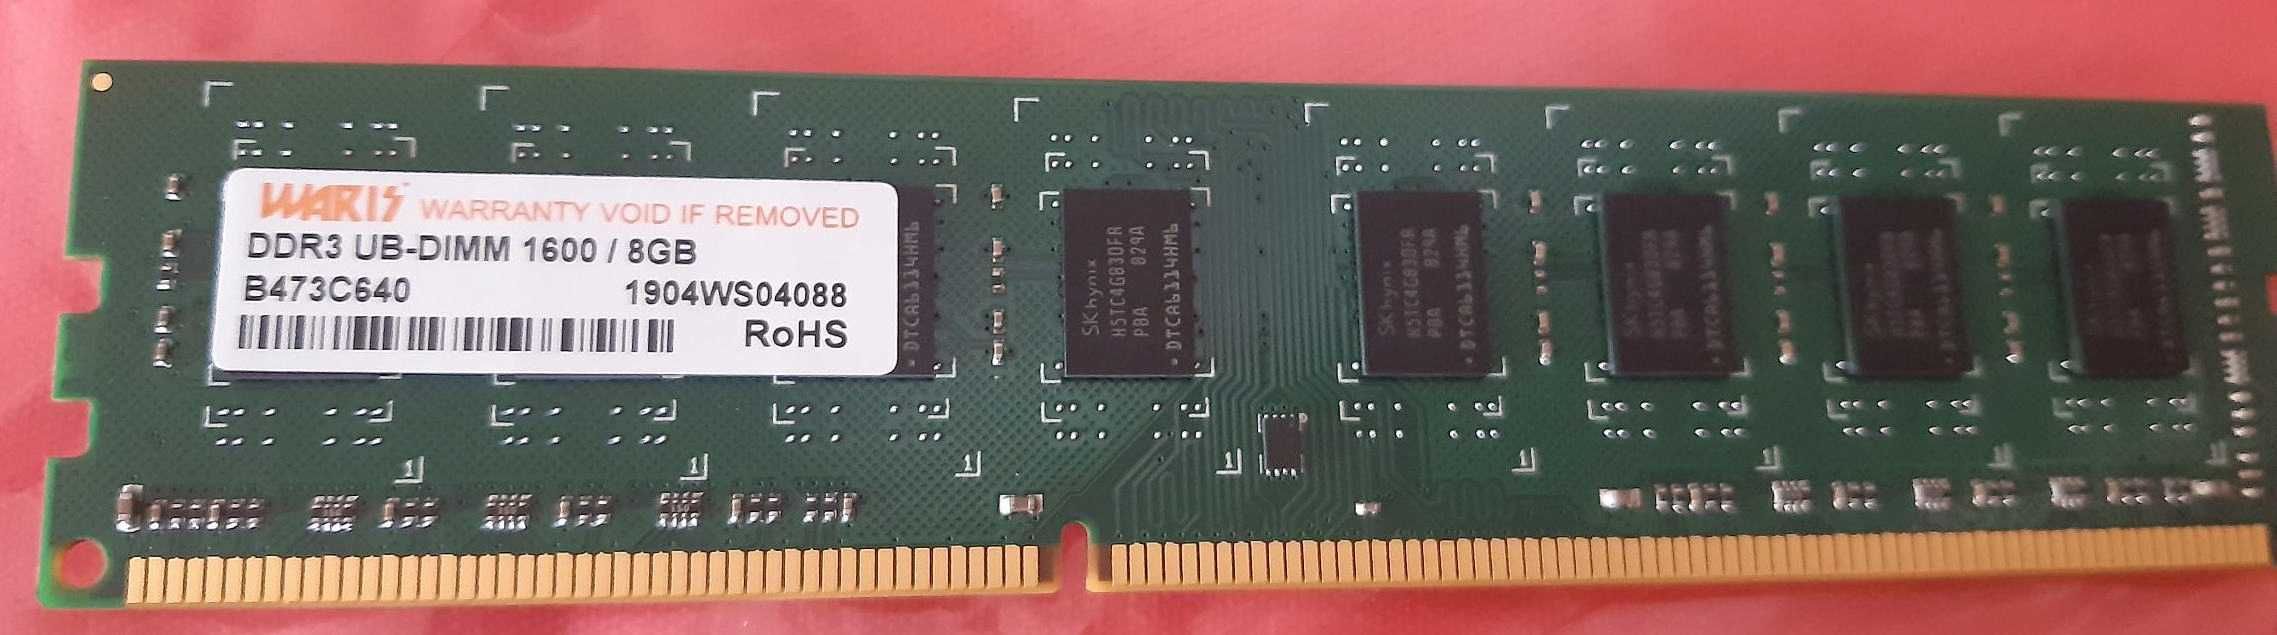 Memória Waris DDR3 - 1600Mhz - 8GB RAM Módulos - nunca usados